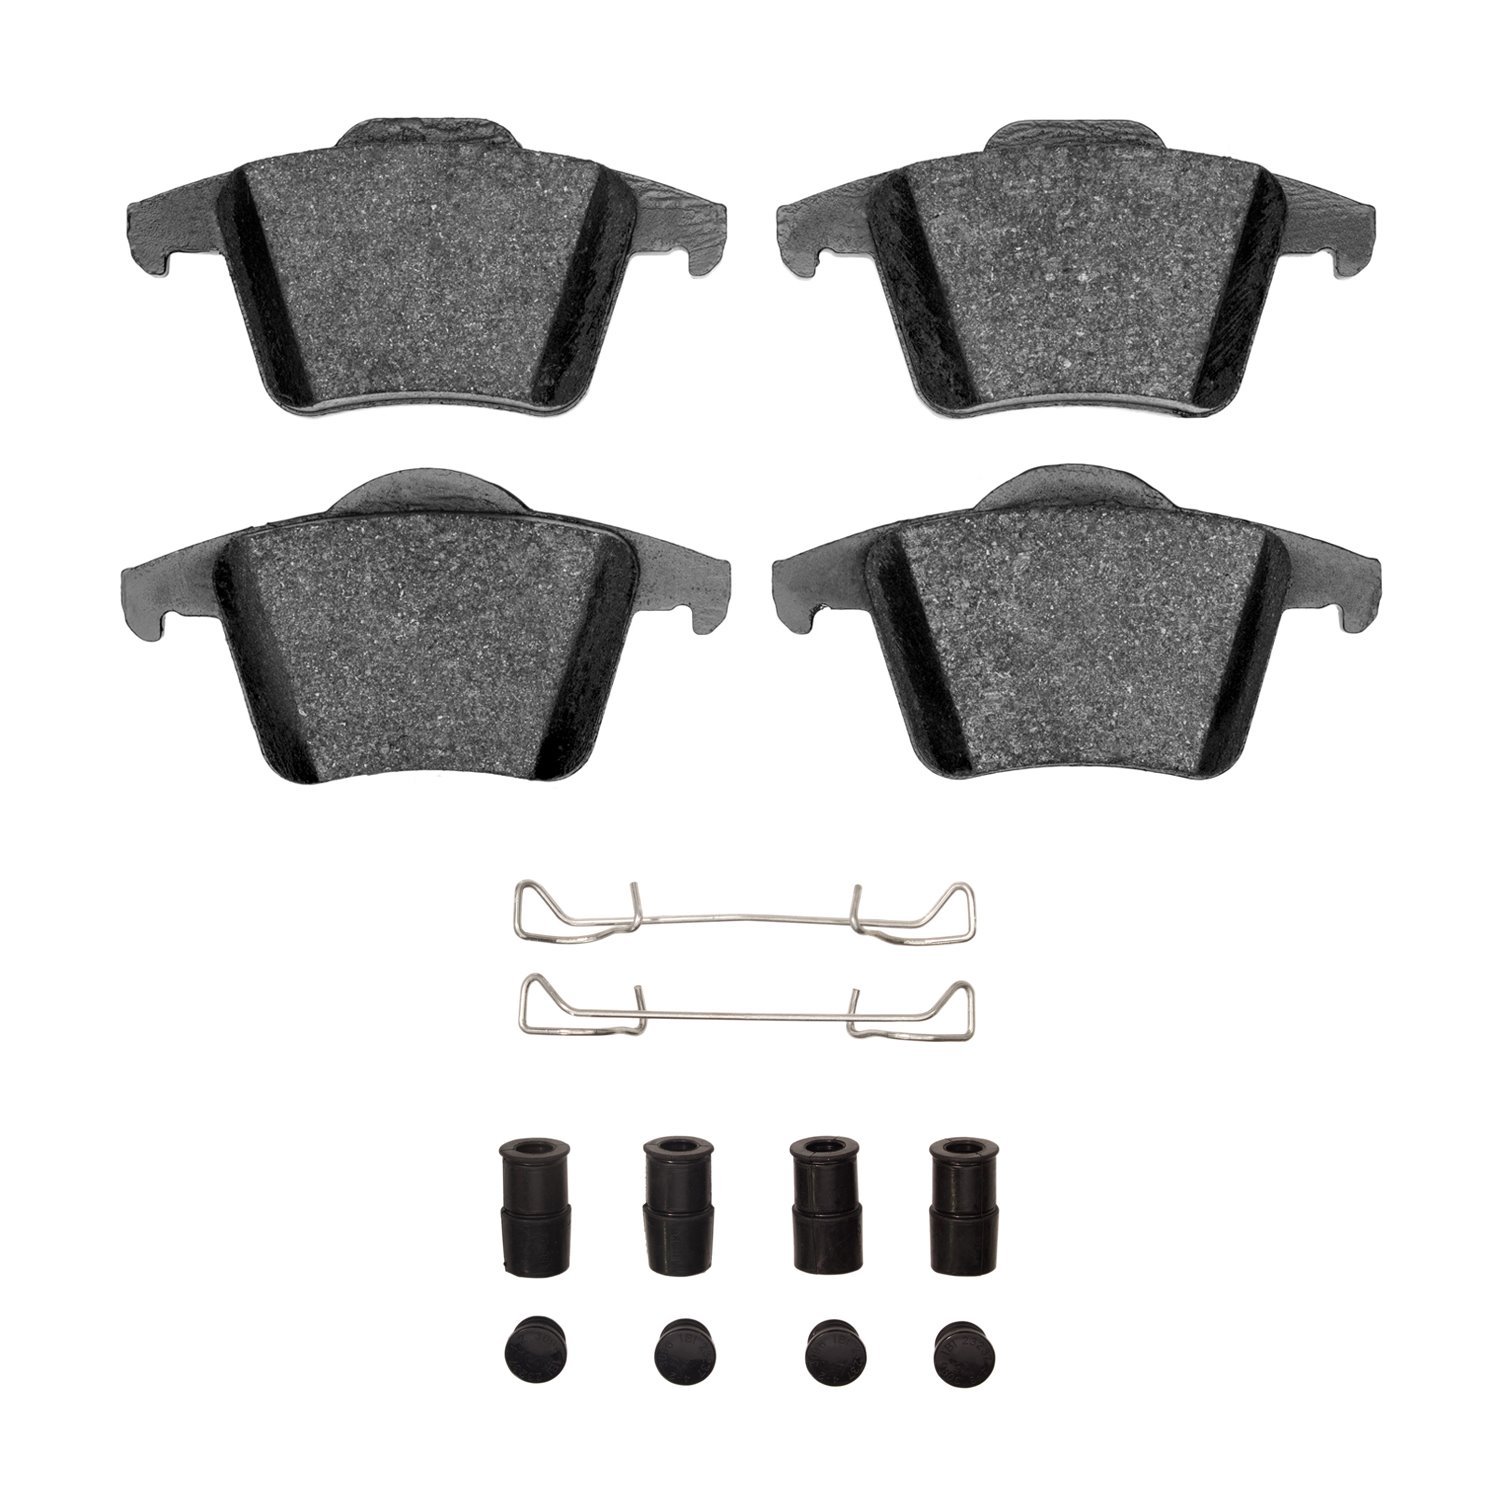 1600-0980-01 5000 Euro Ceramic Brake Pads & Hardware Kit, 2003-2014 Volvo, Position: Rear